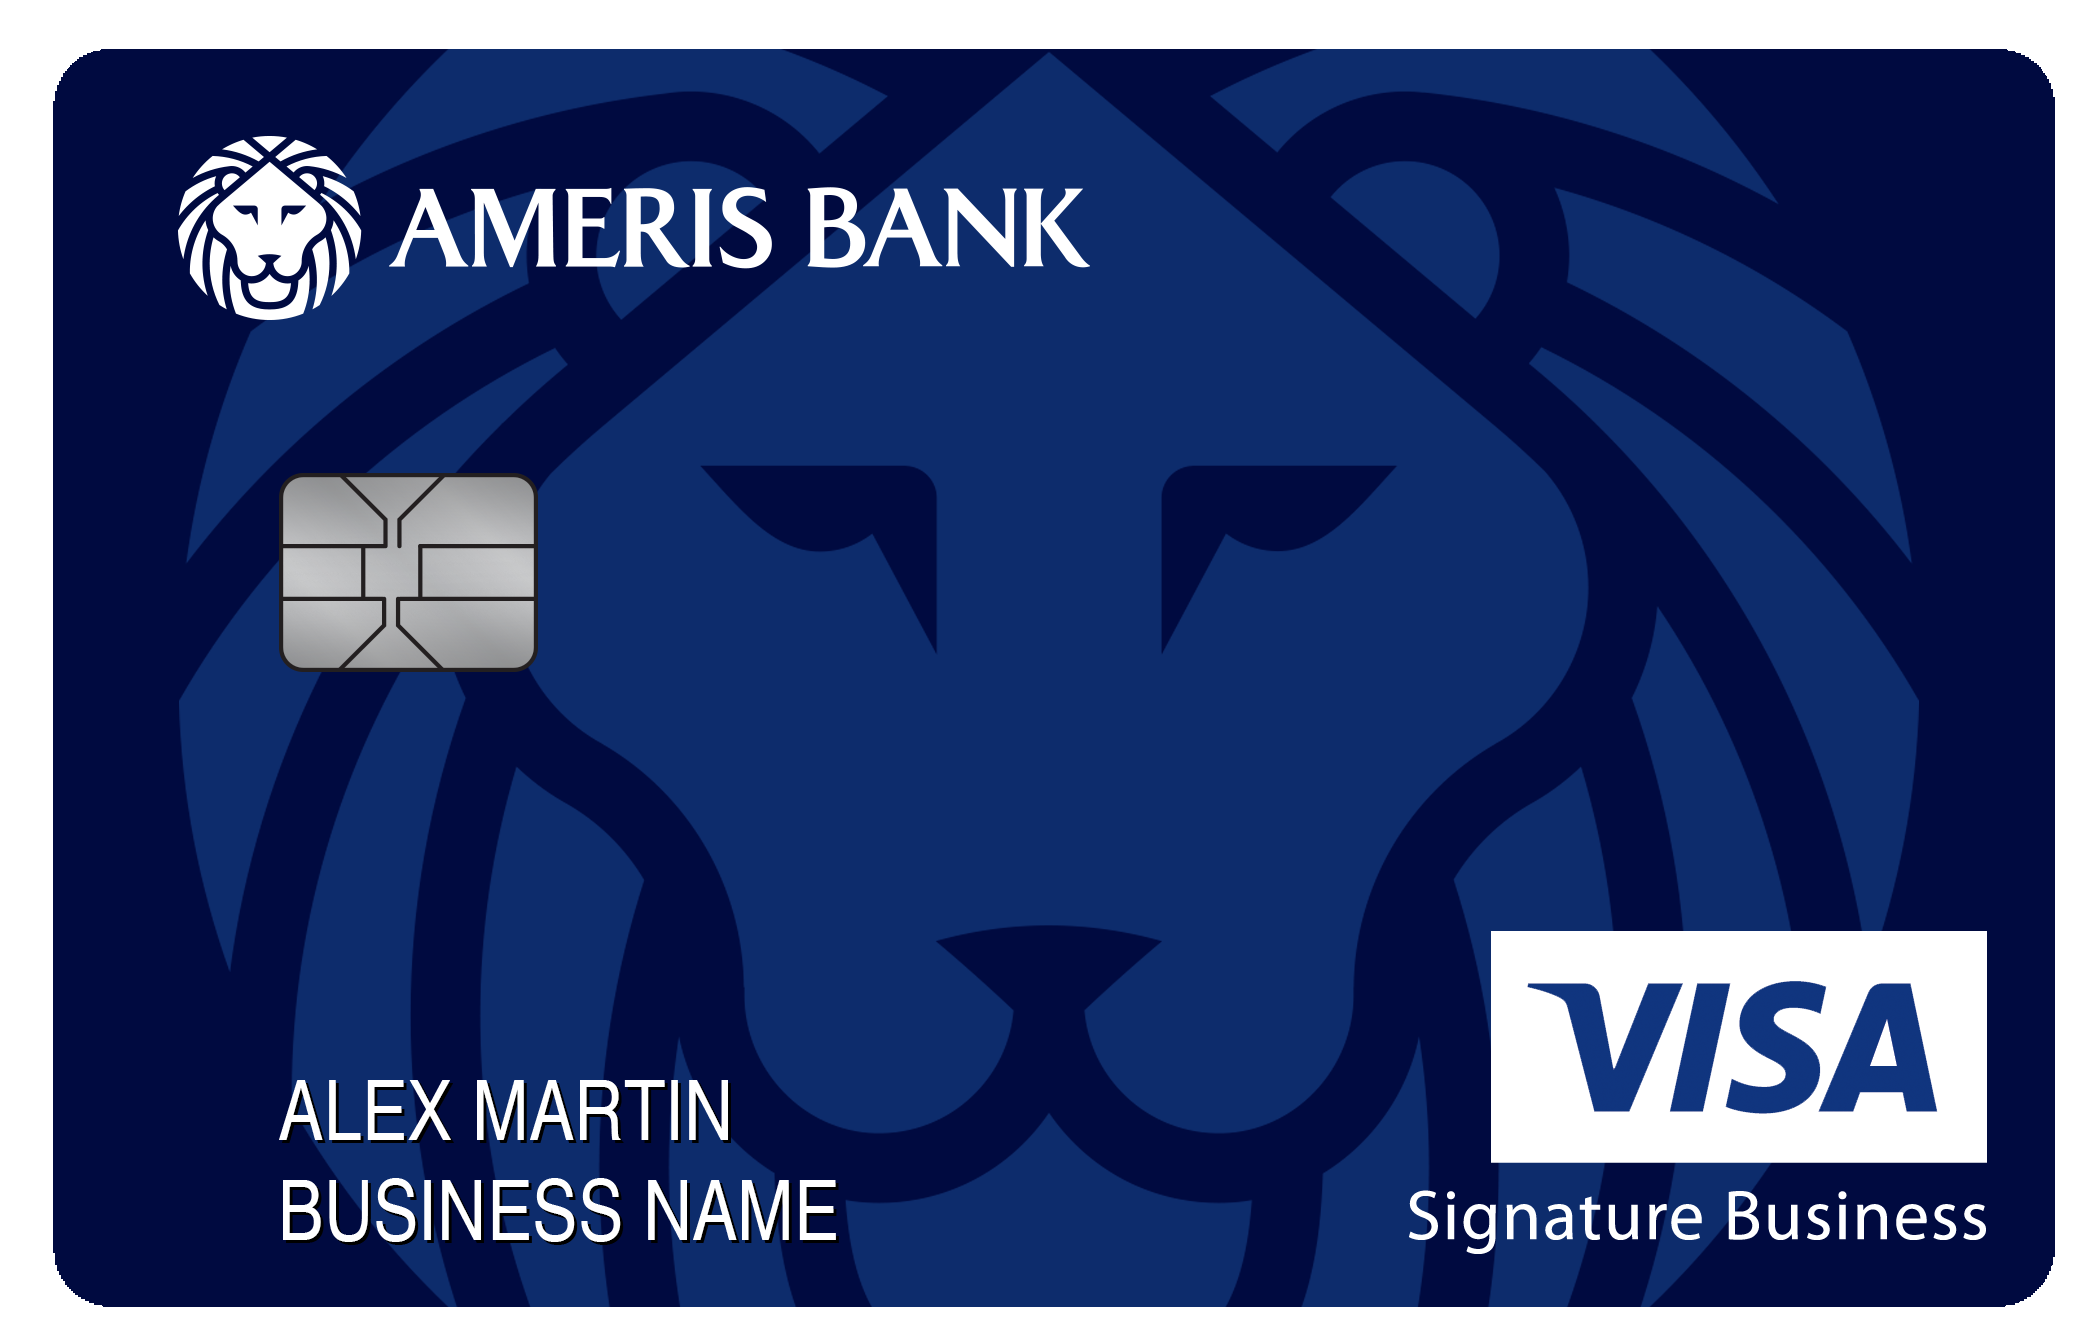 Ameris Bank Smart Business Rewards Card